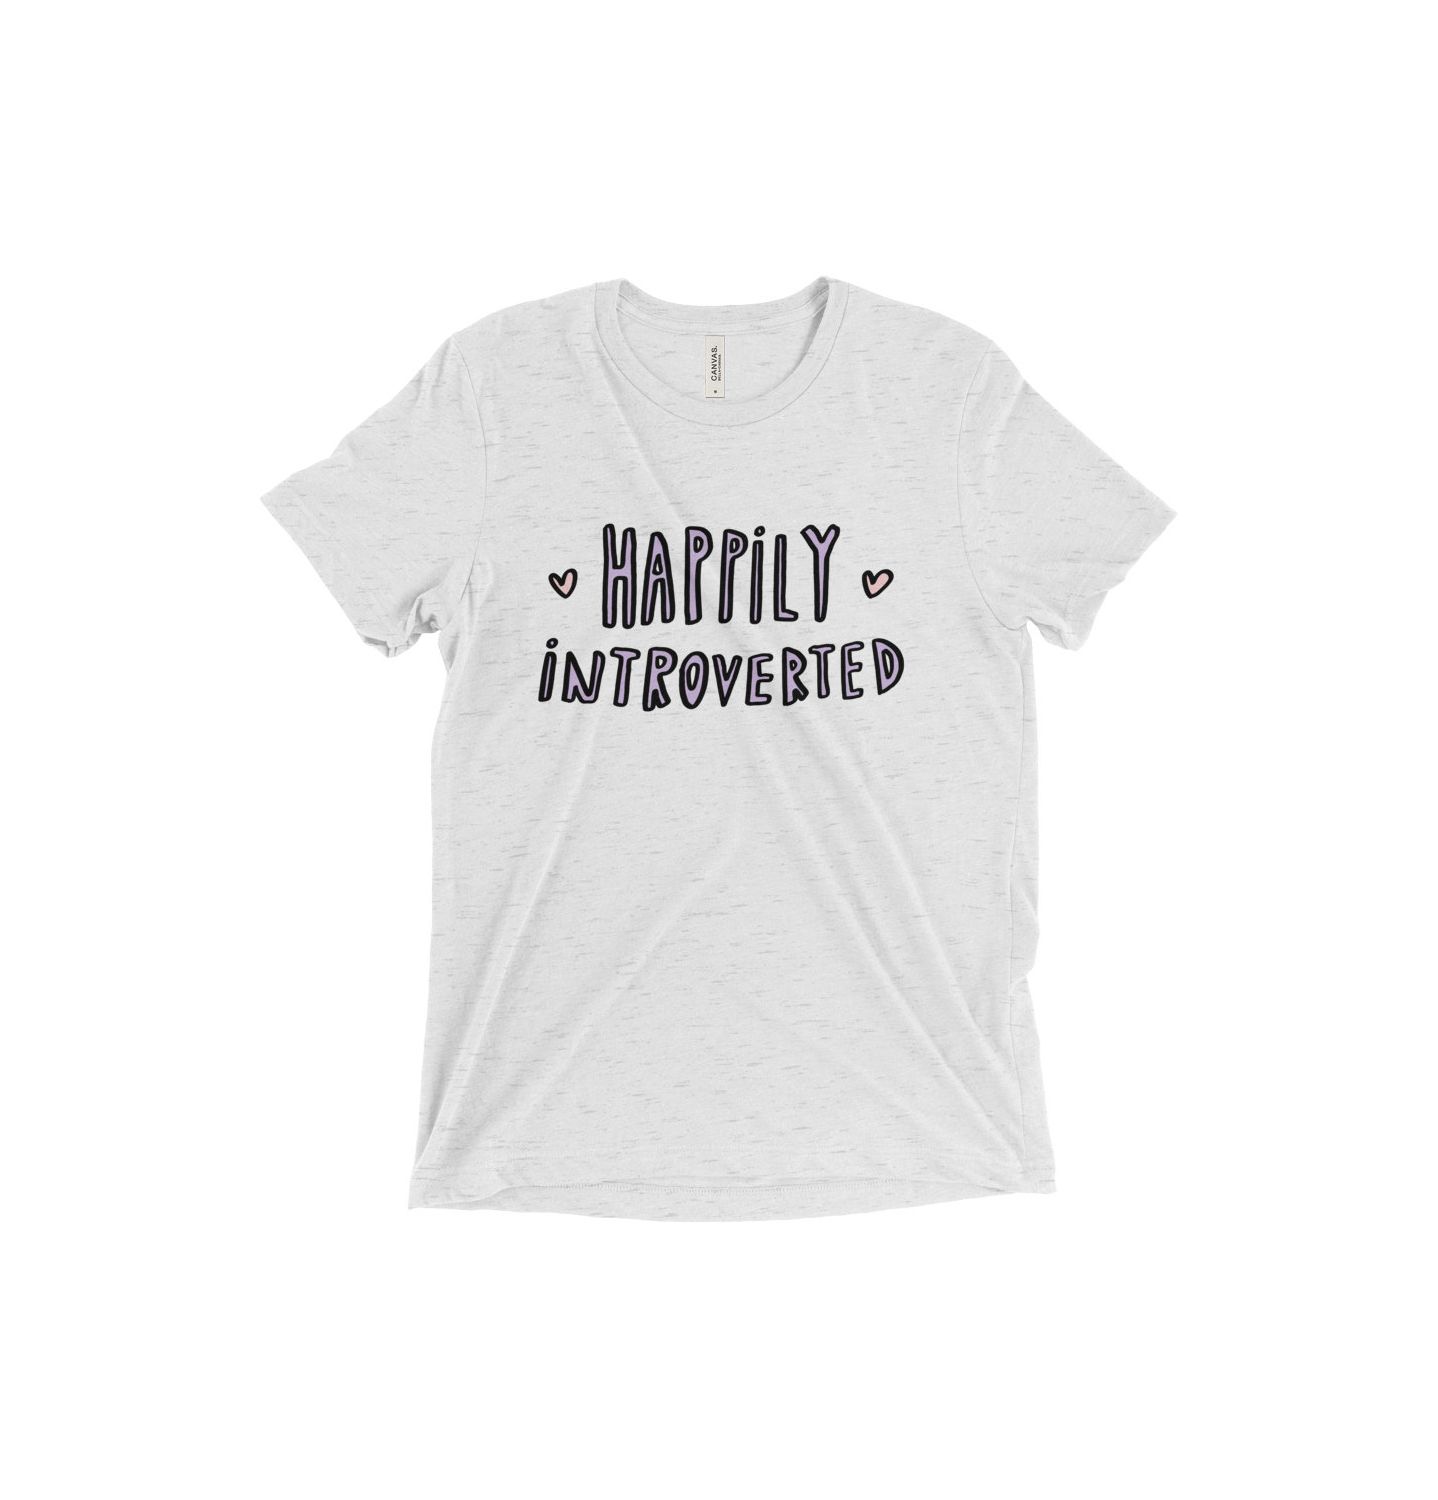 Camiseta Happily Introverted